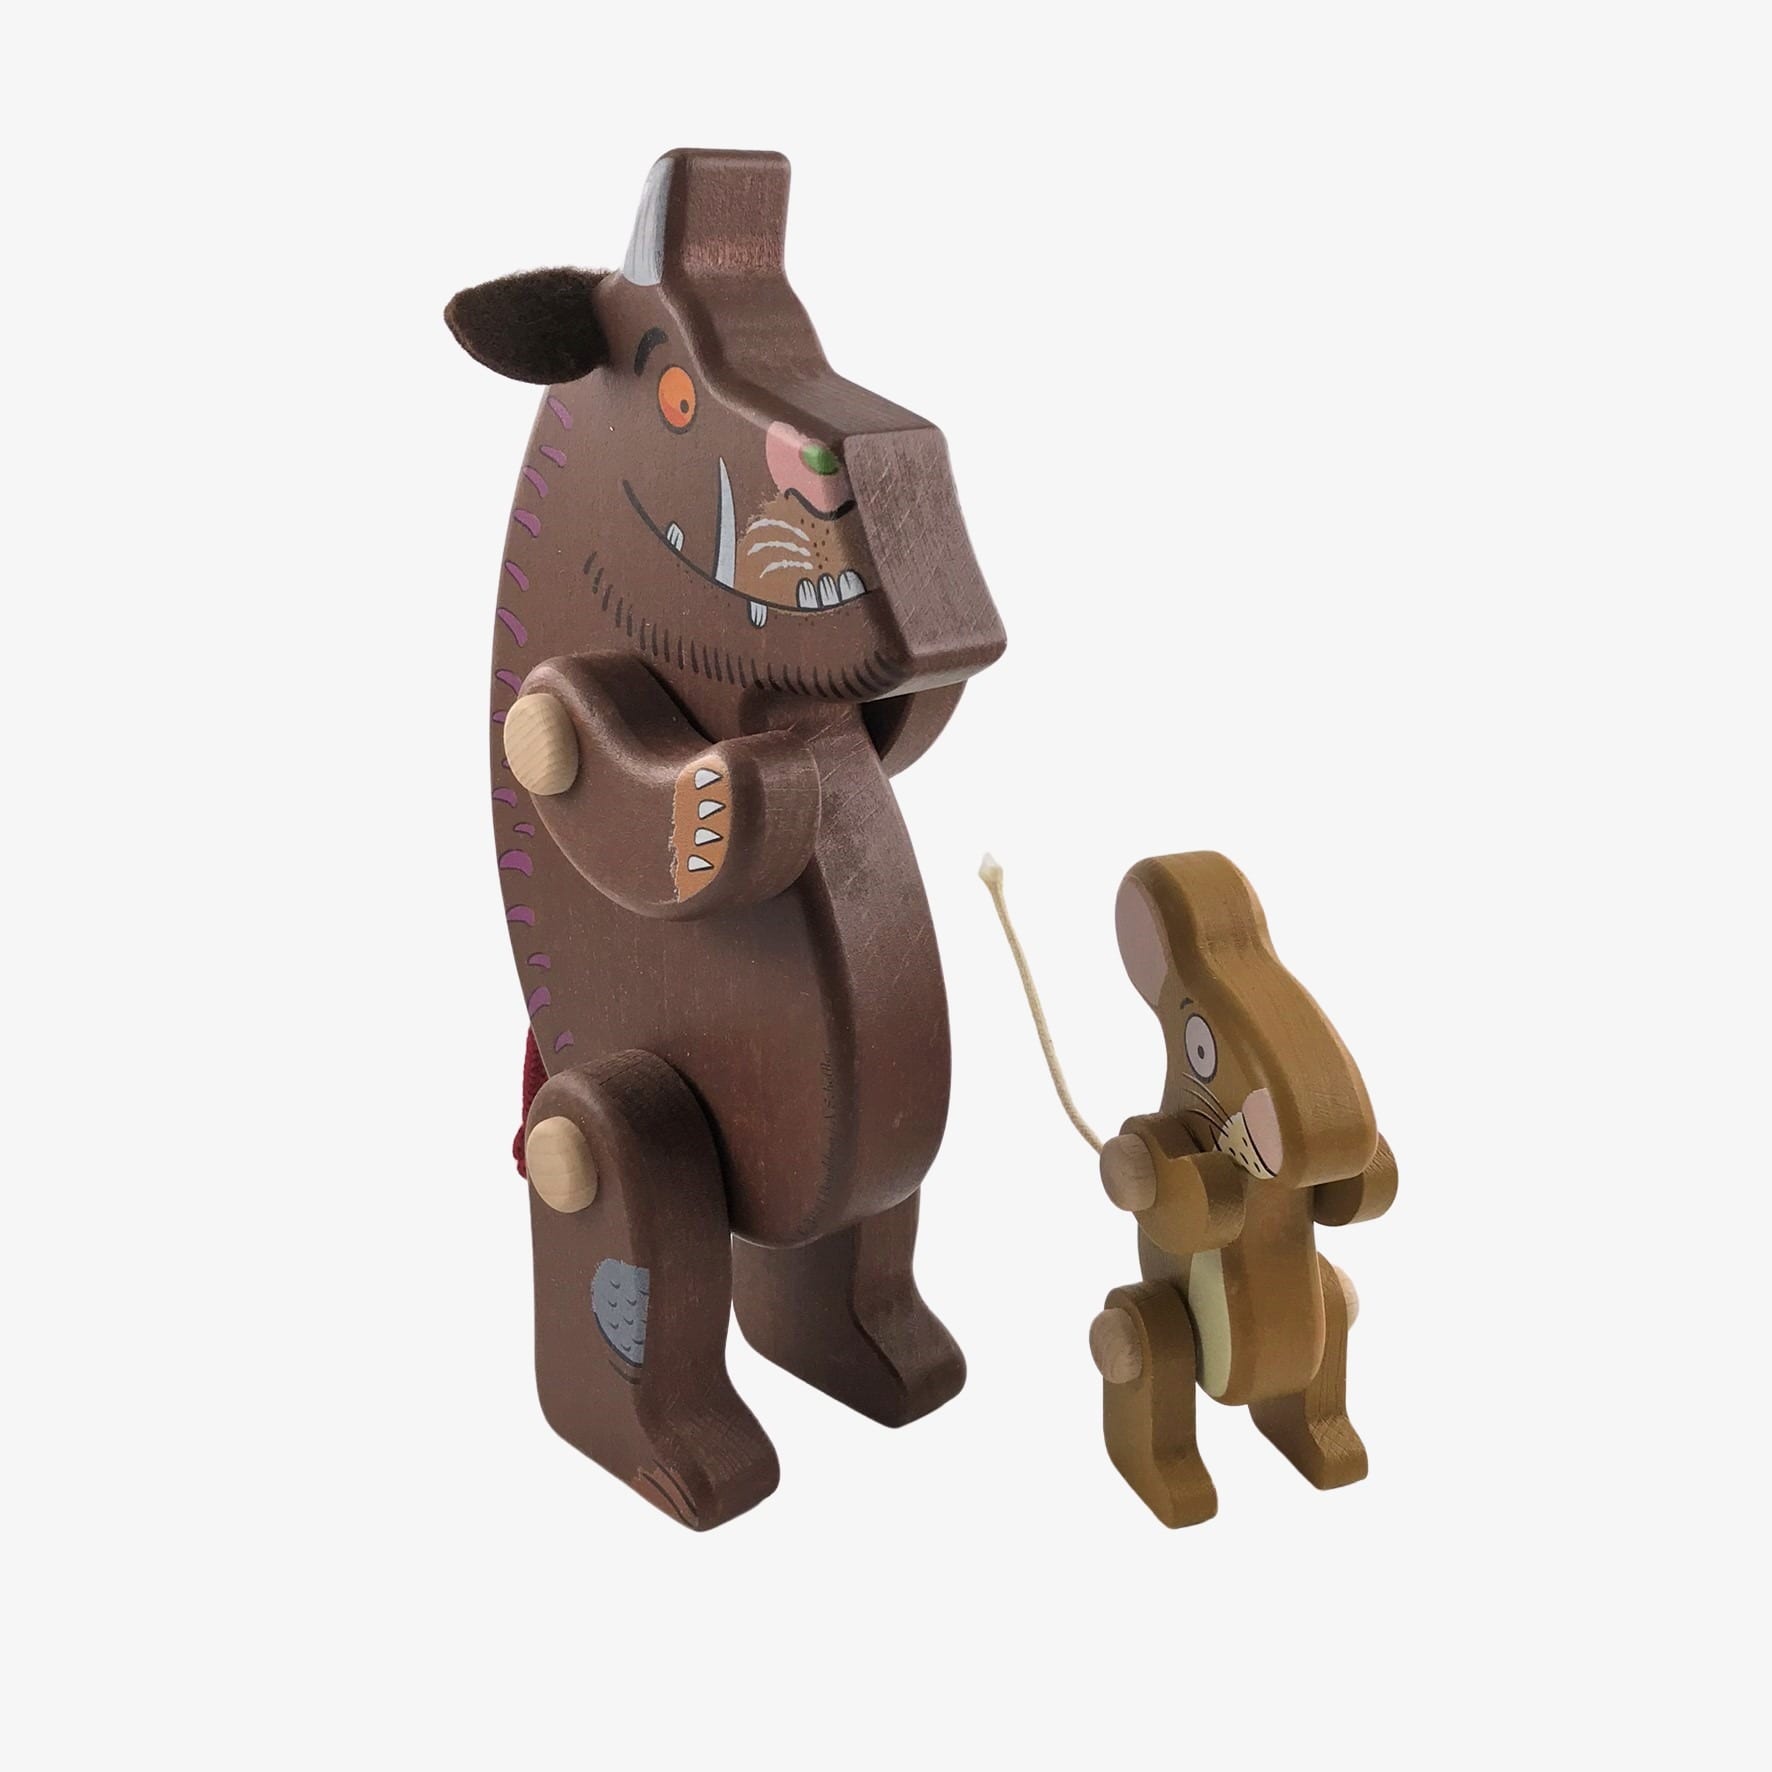 wooden gruffalo figures